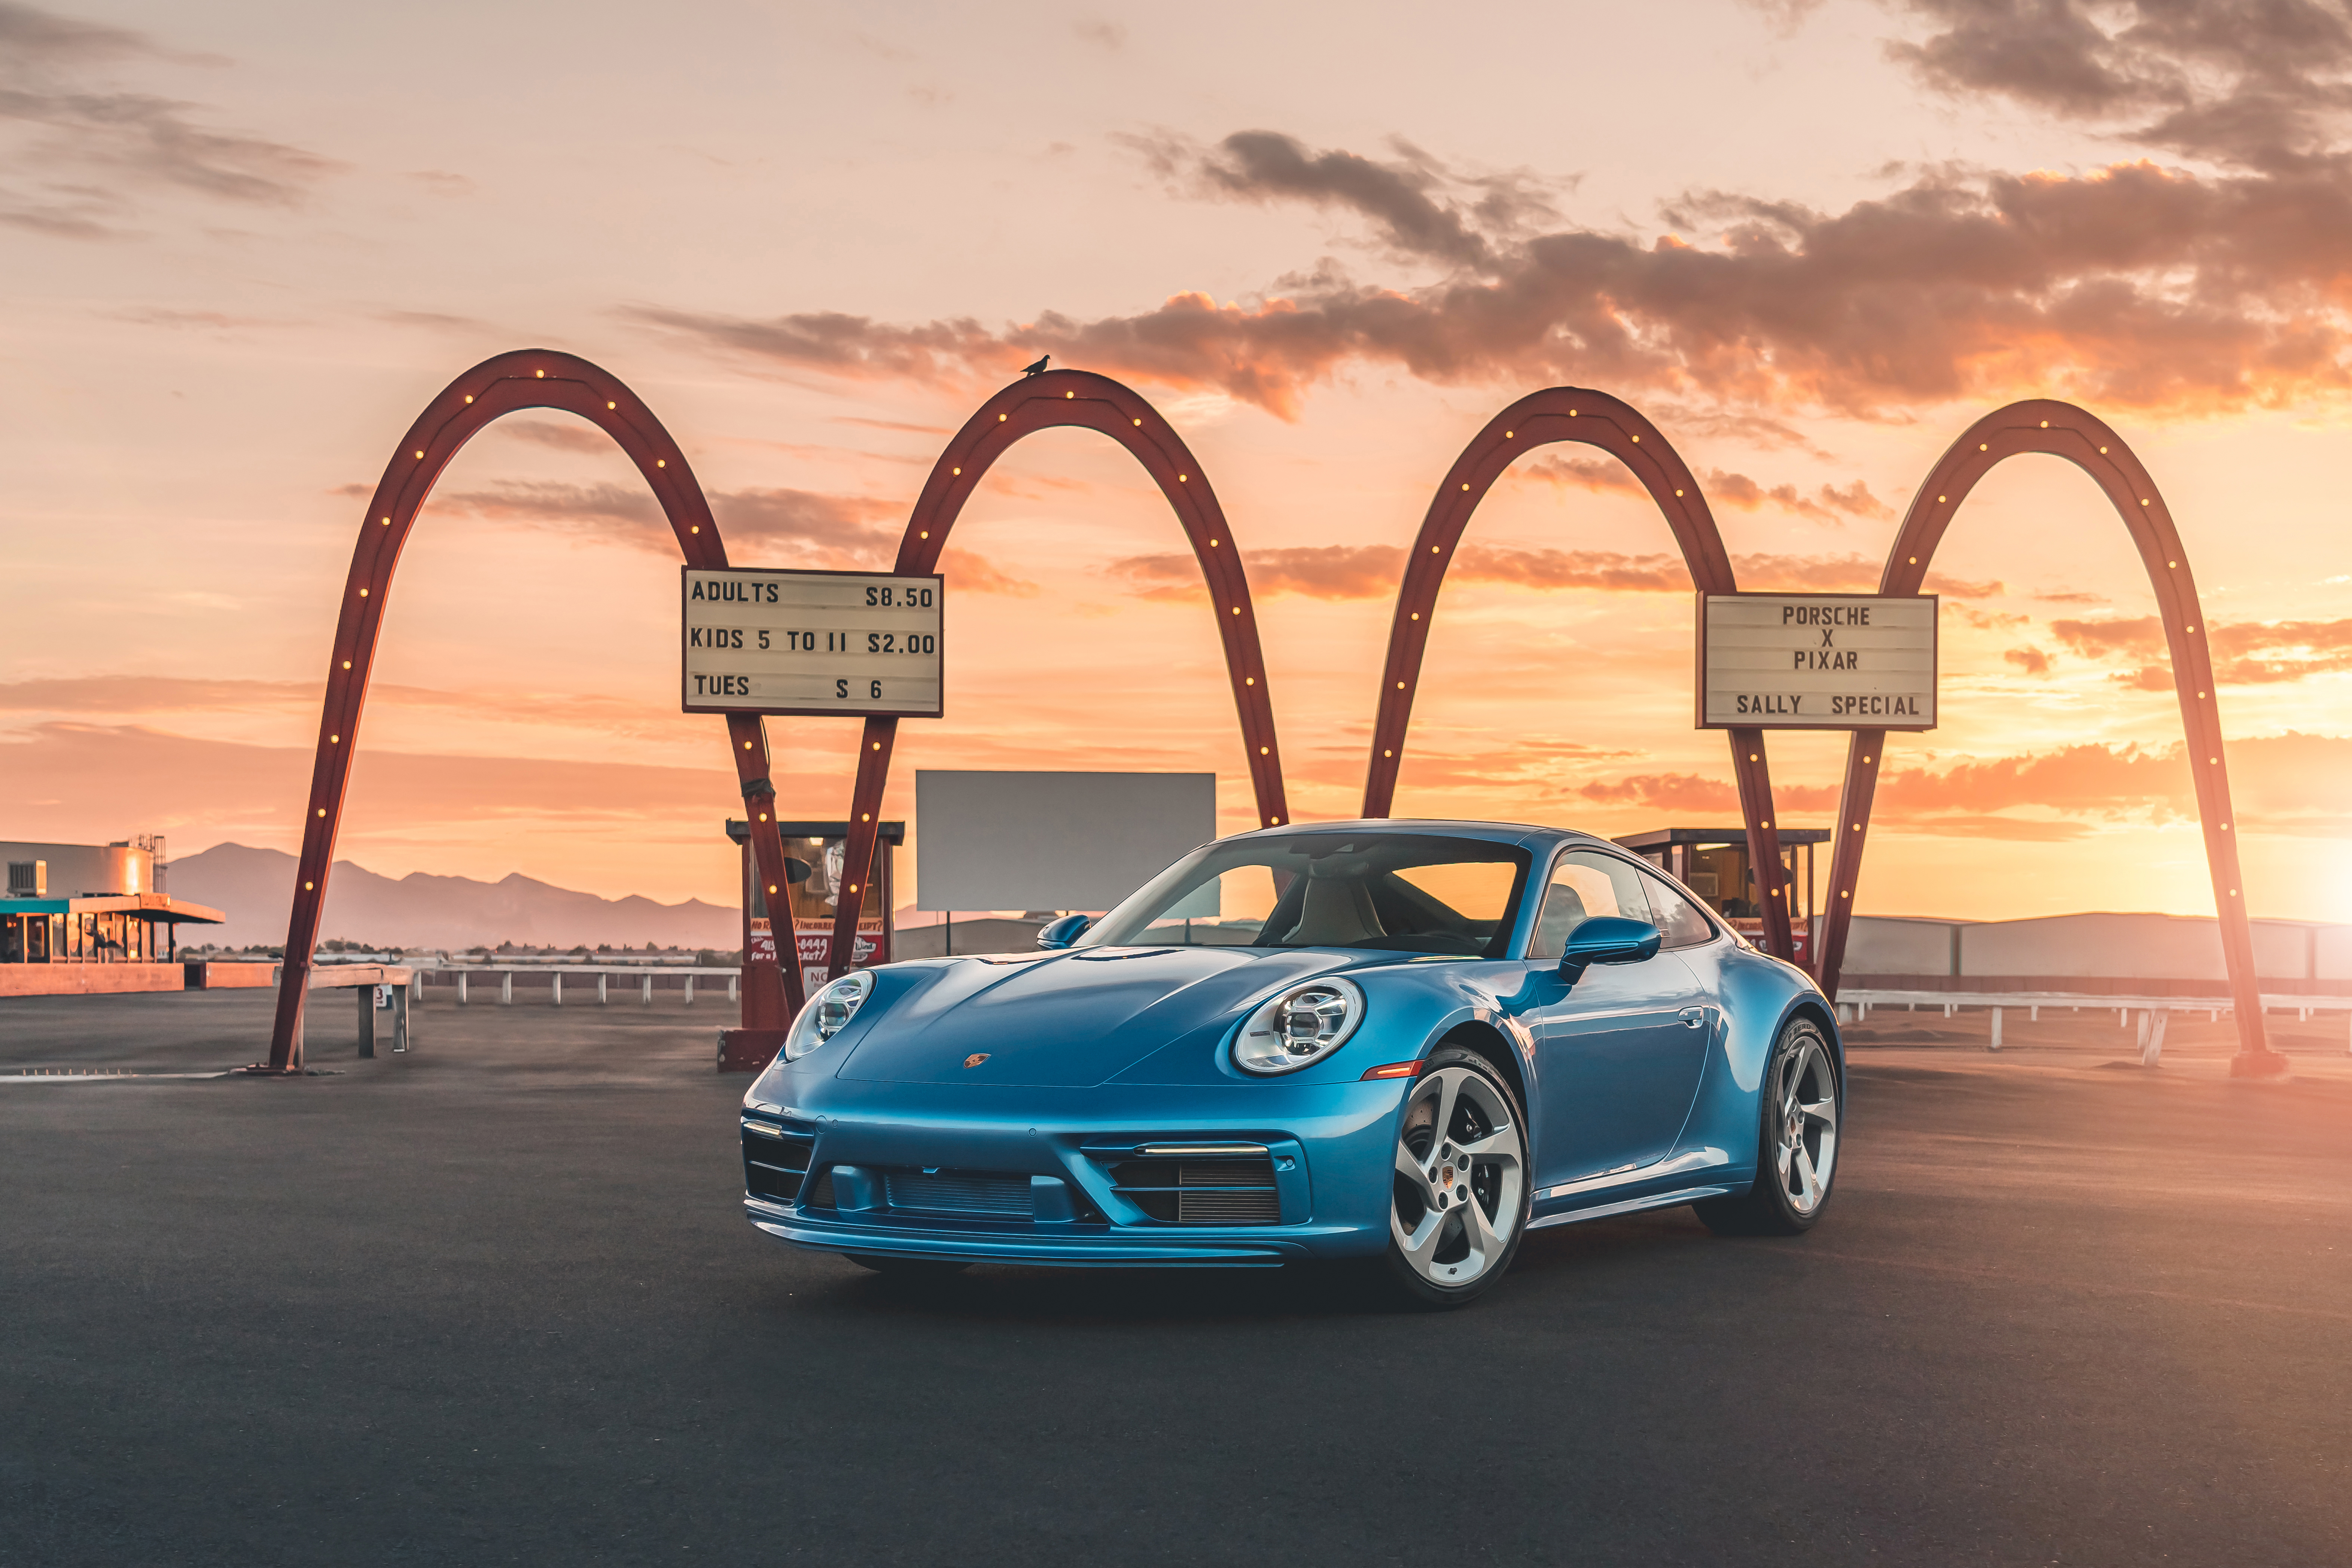 Blue Porsche 911 Sally Special at sunset in US desert